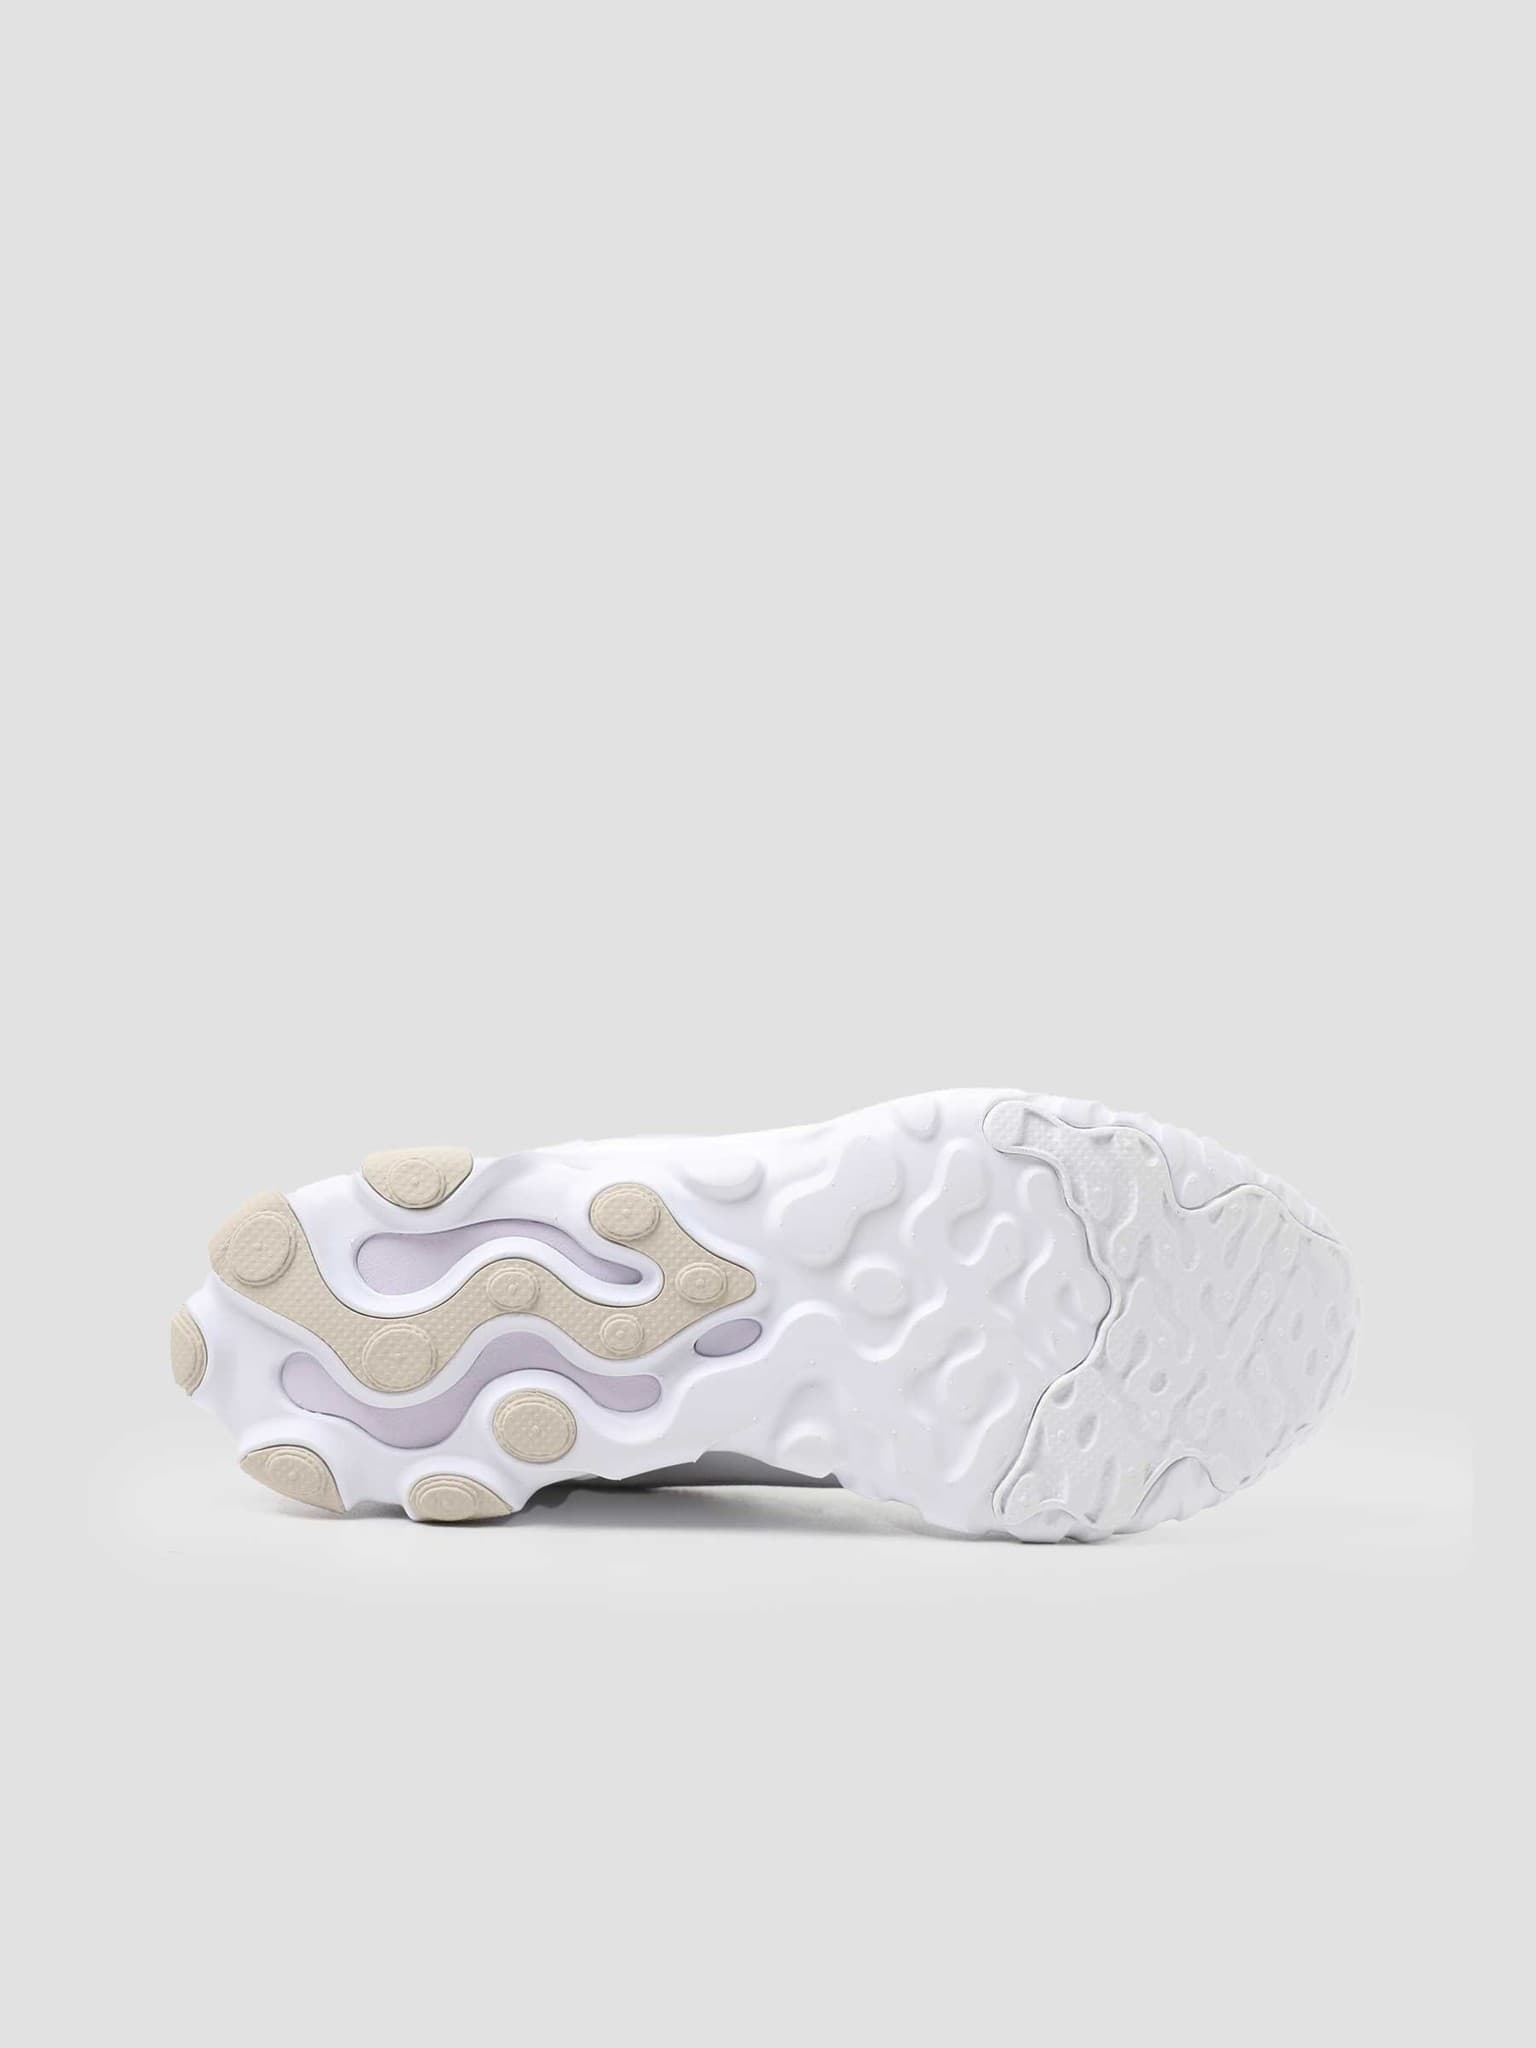 W Nike React Art3Mis White Infinite Lilac Light Bone DA1647-100